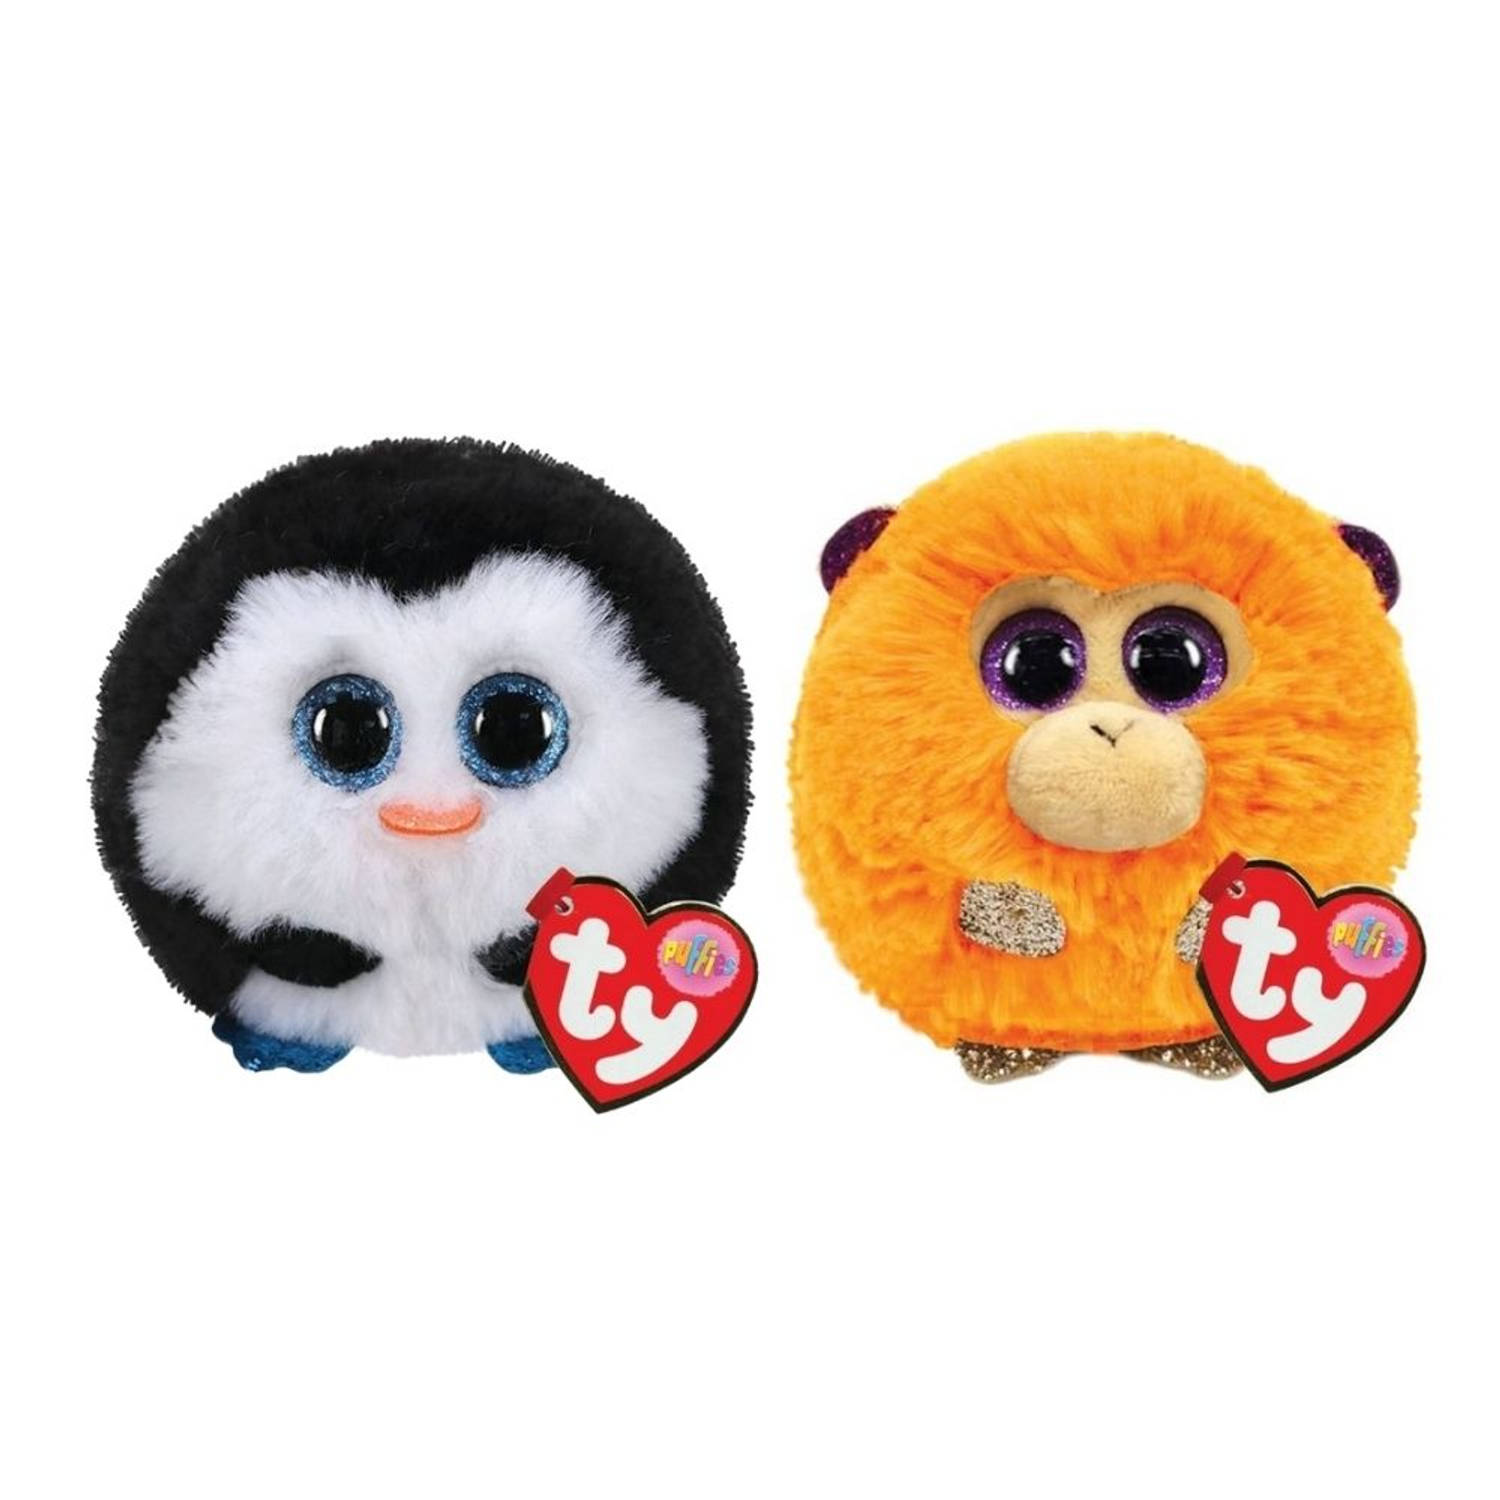 Ty Knuffel Teeny Puffies Waddles Penguin & Coconut Monkey